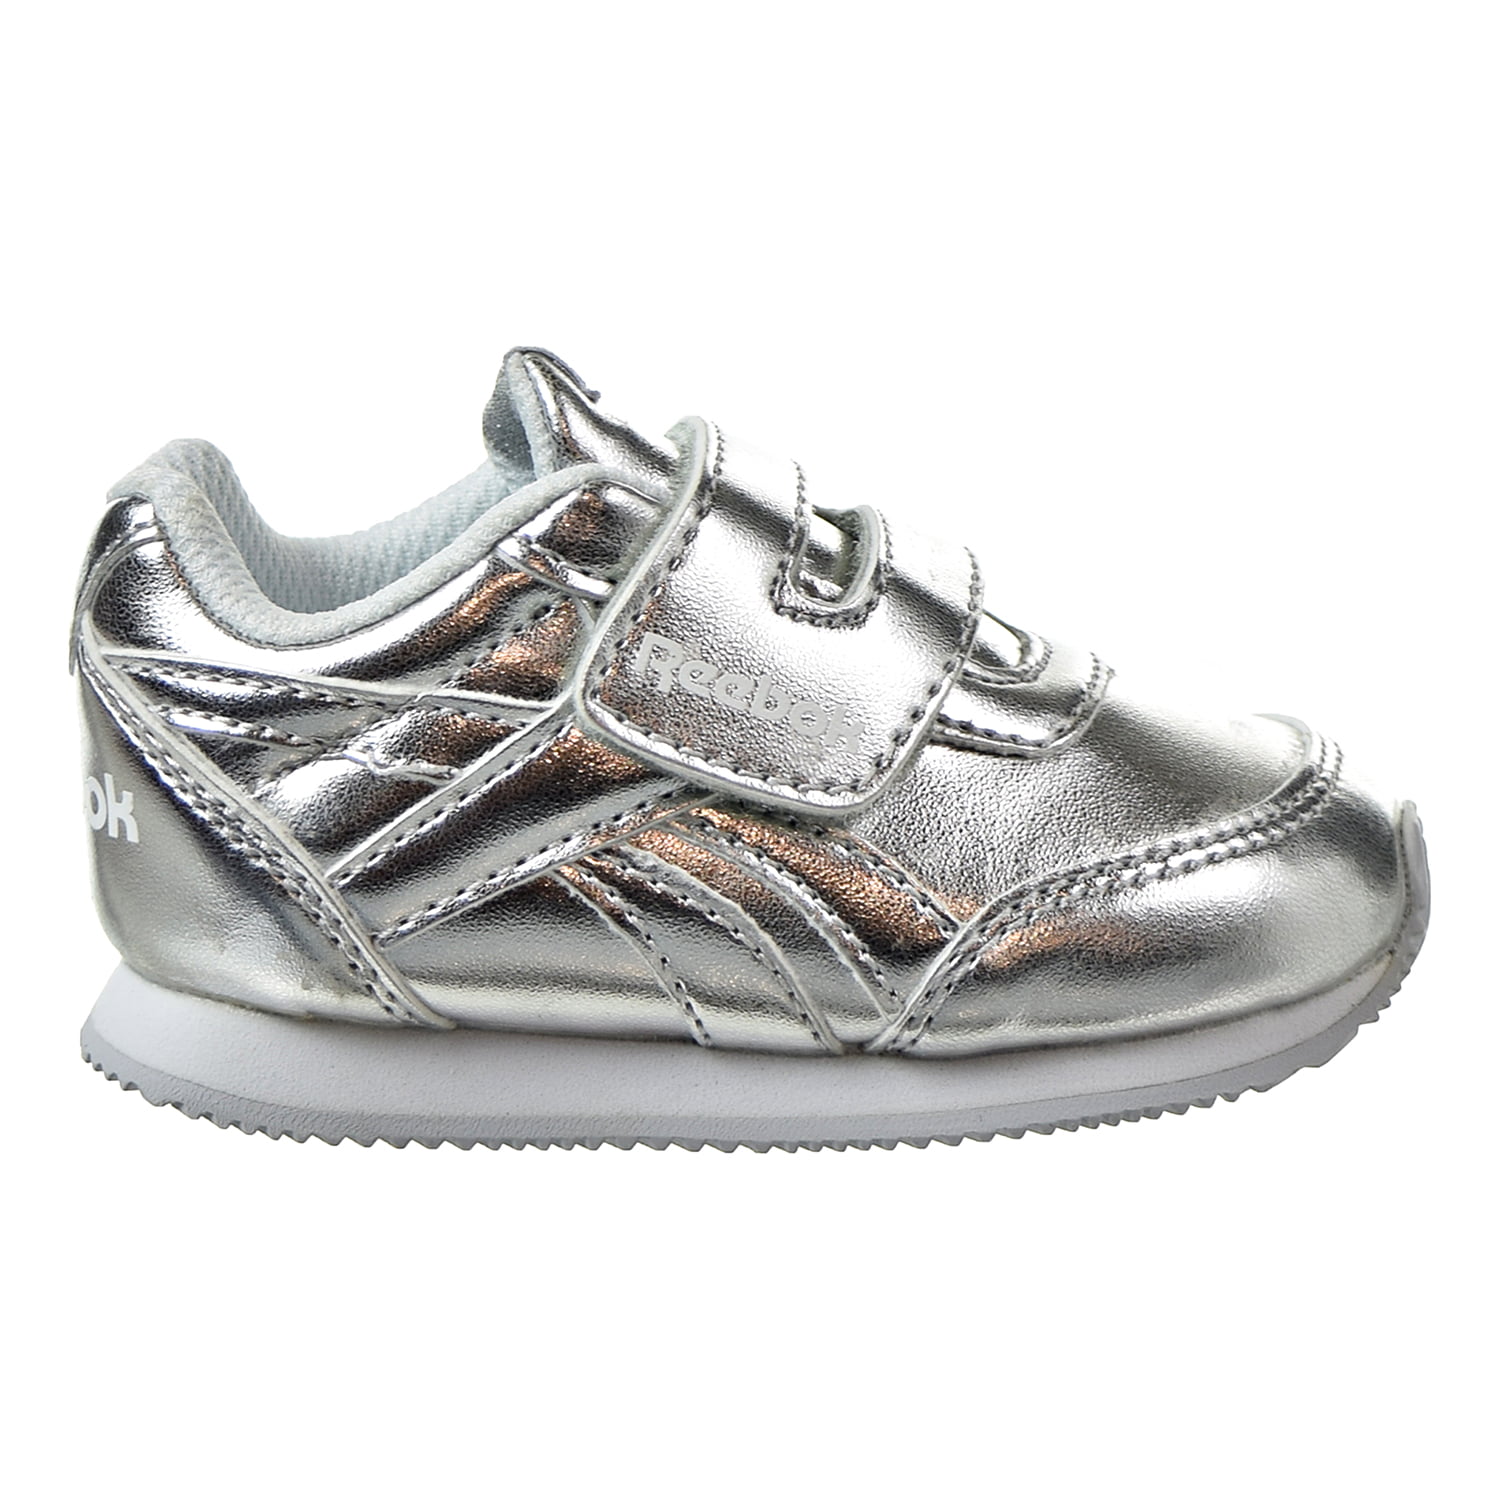 Reebok Royal Classic Toddler's Jogger 2.0 KC Shoes Silver Metallic/White  cn1345 - Walmart.com - Walmart.com